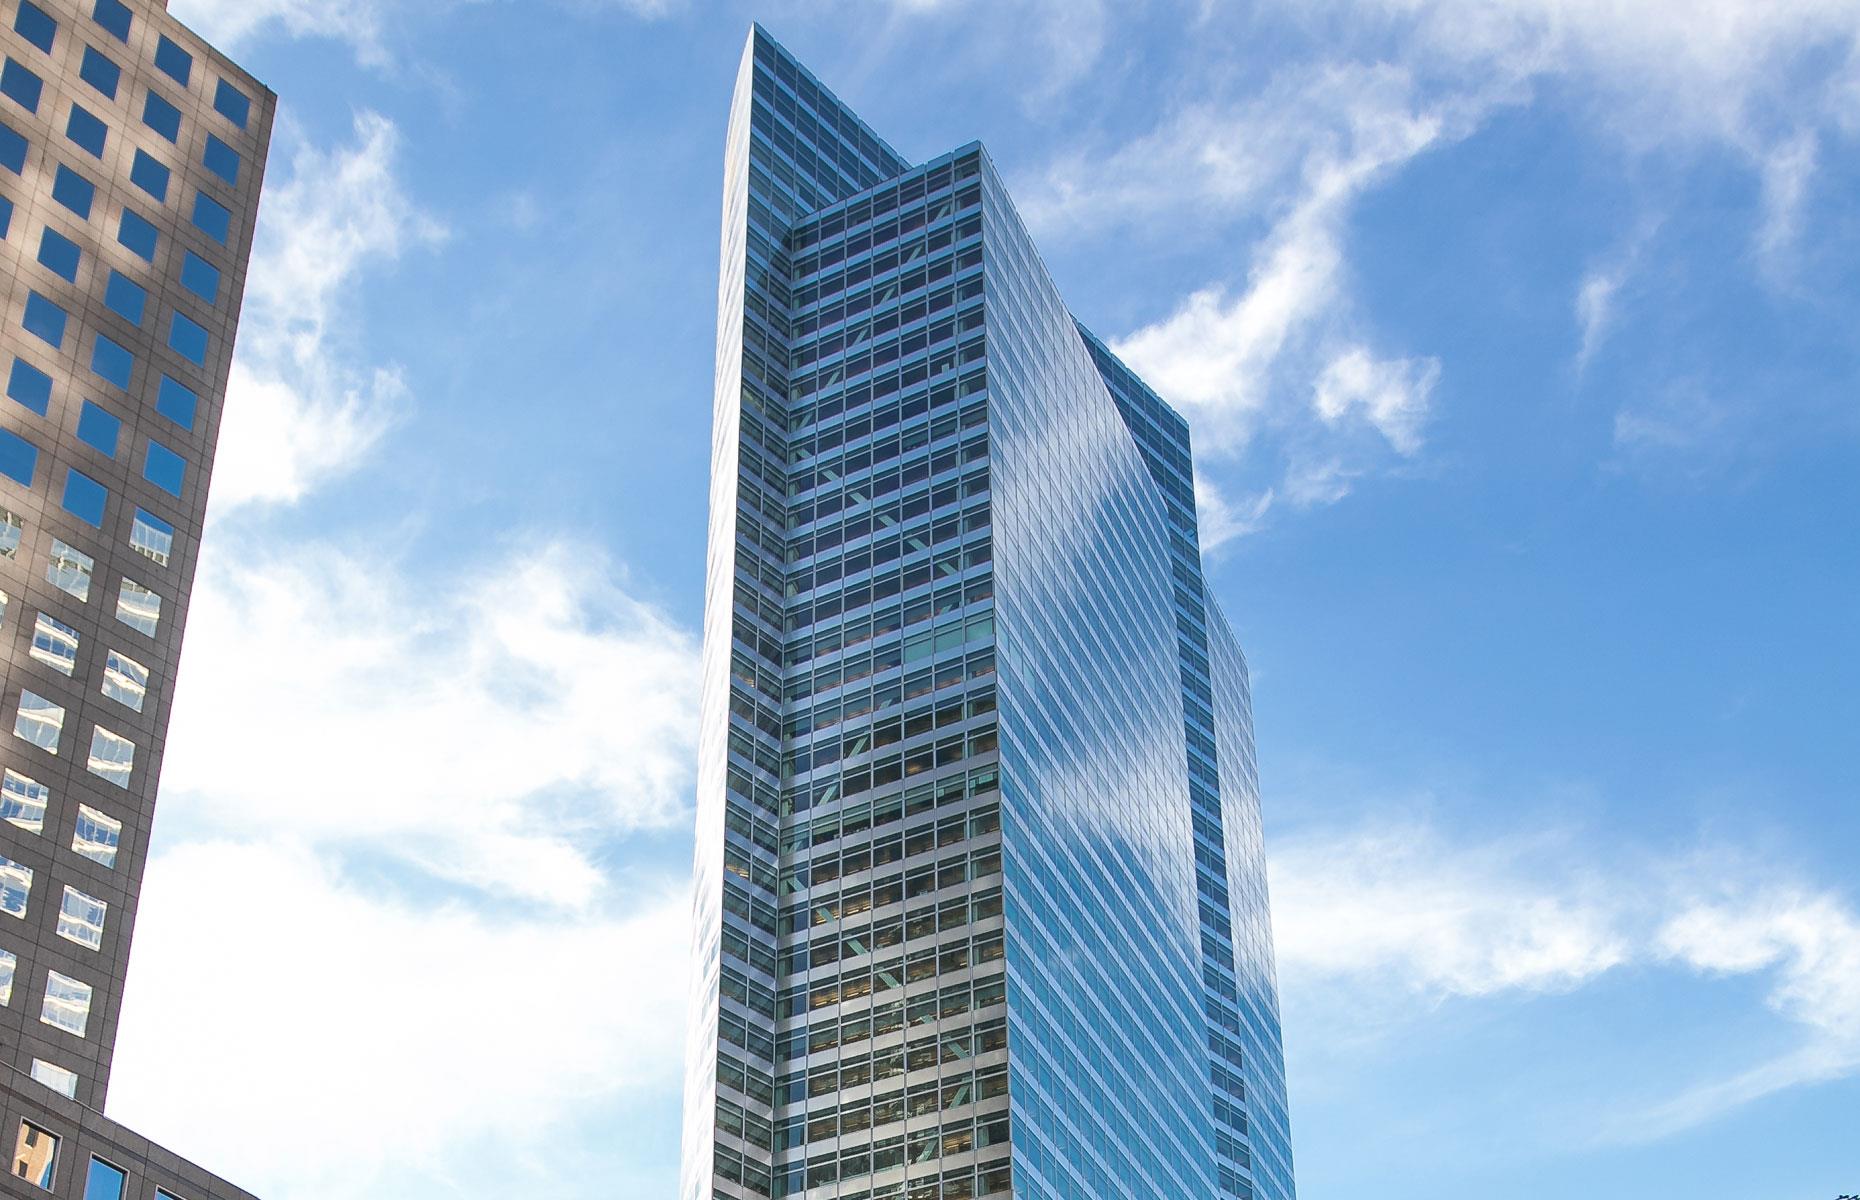 7. Goldman Sachs Headquarters, New York: $2.9 billion